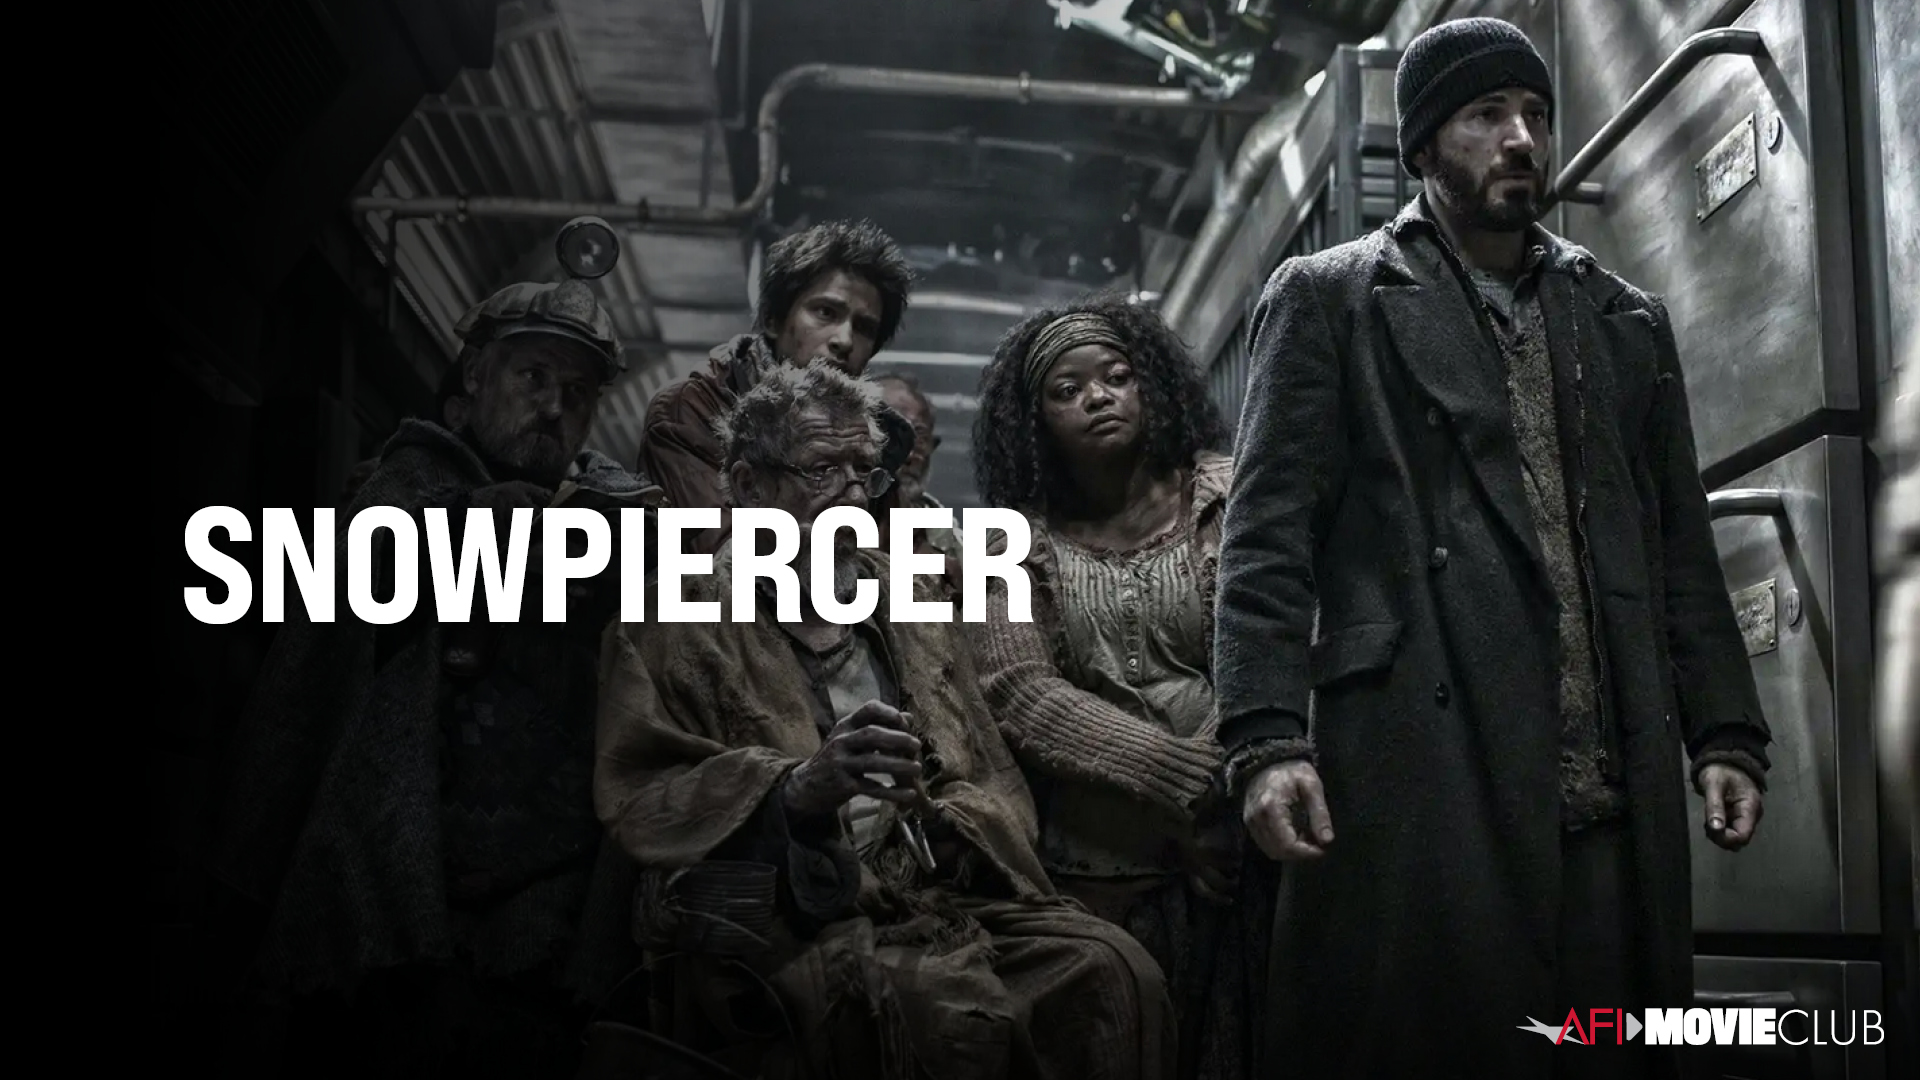 Snowpiercer Film Still - John Hurt, Chris Evans, Octavia Spencer, and Luke Pasqualino